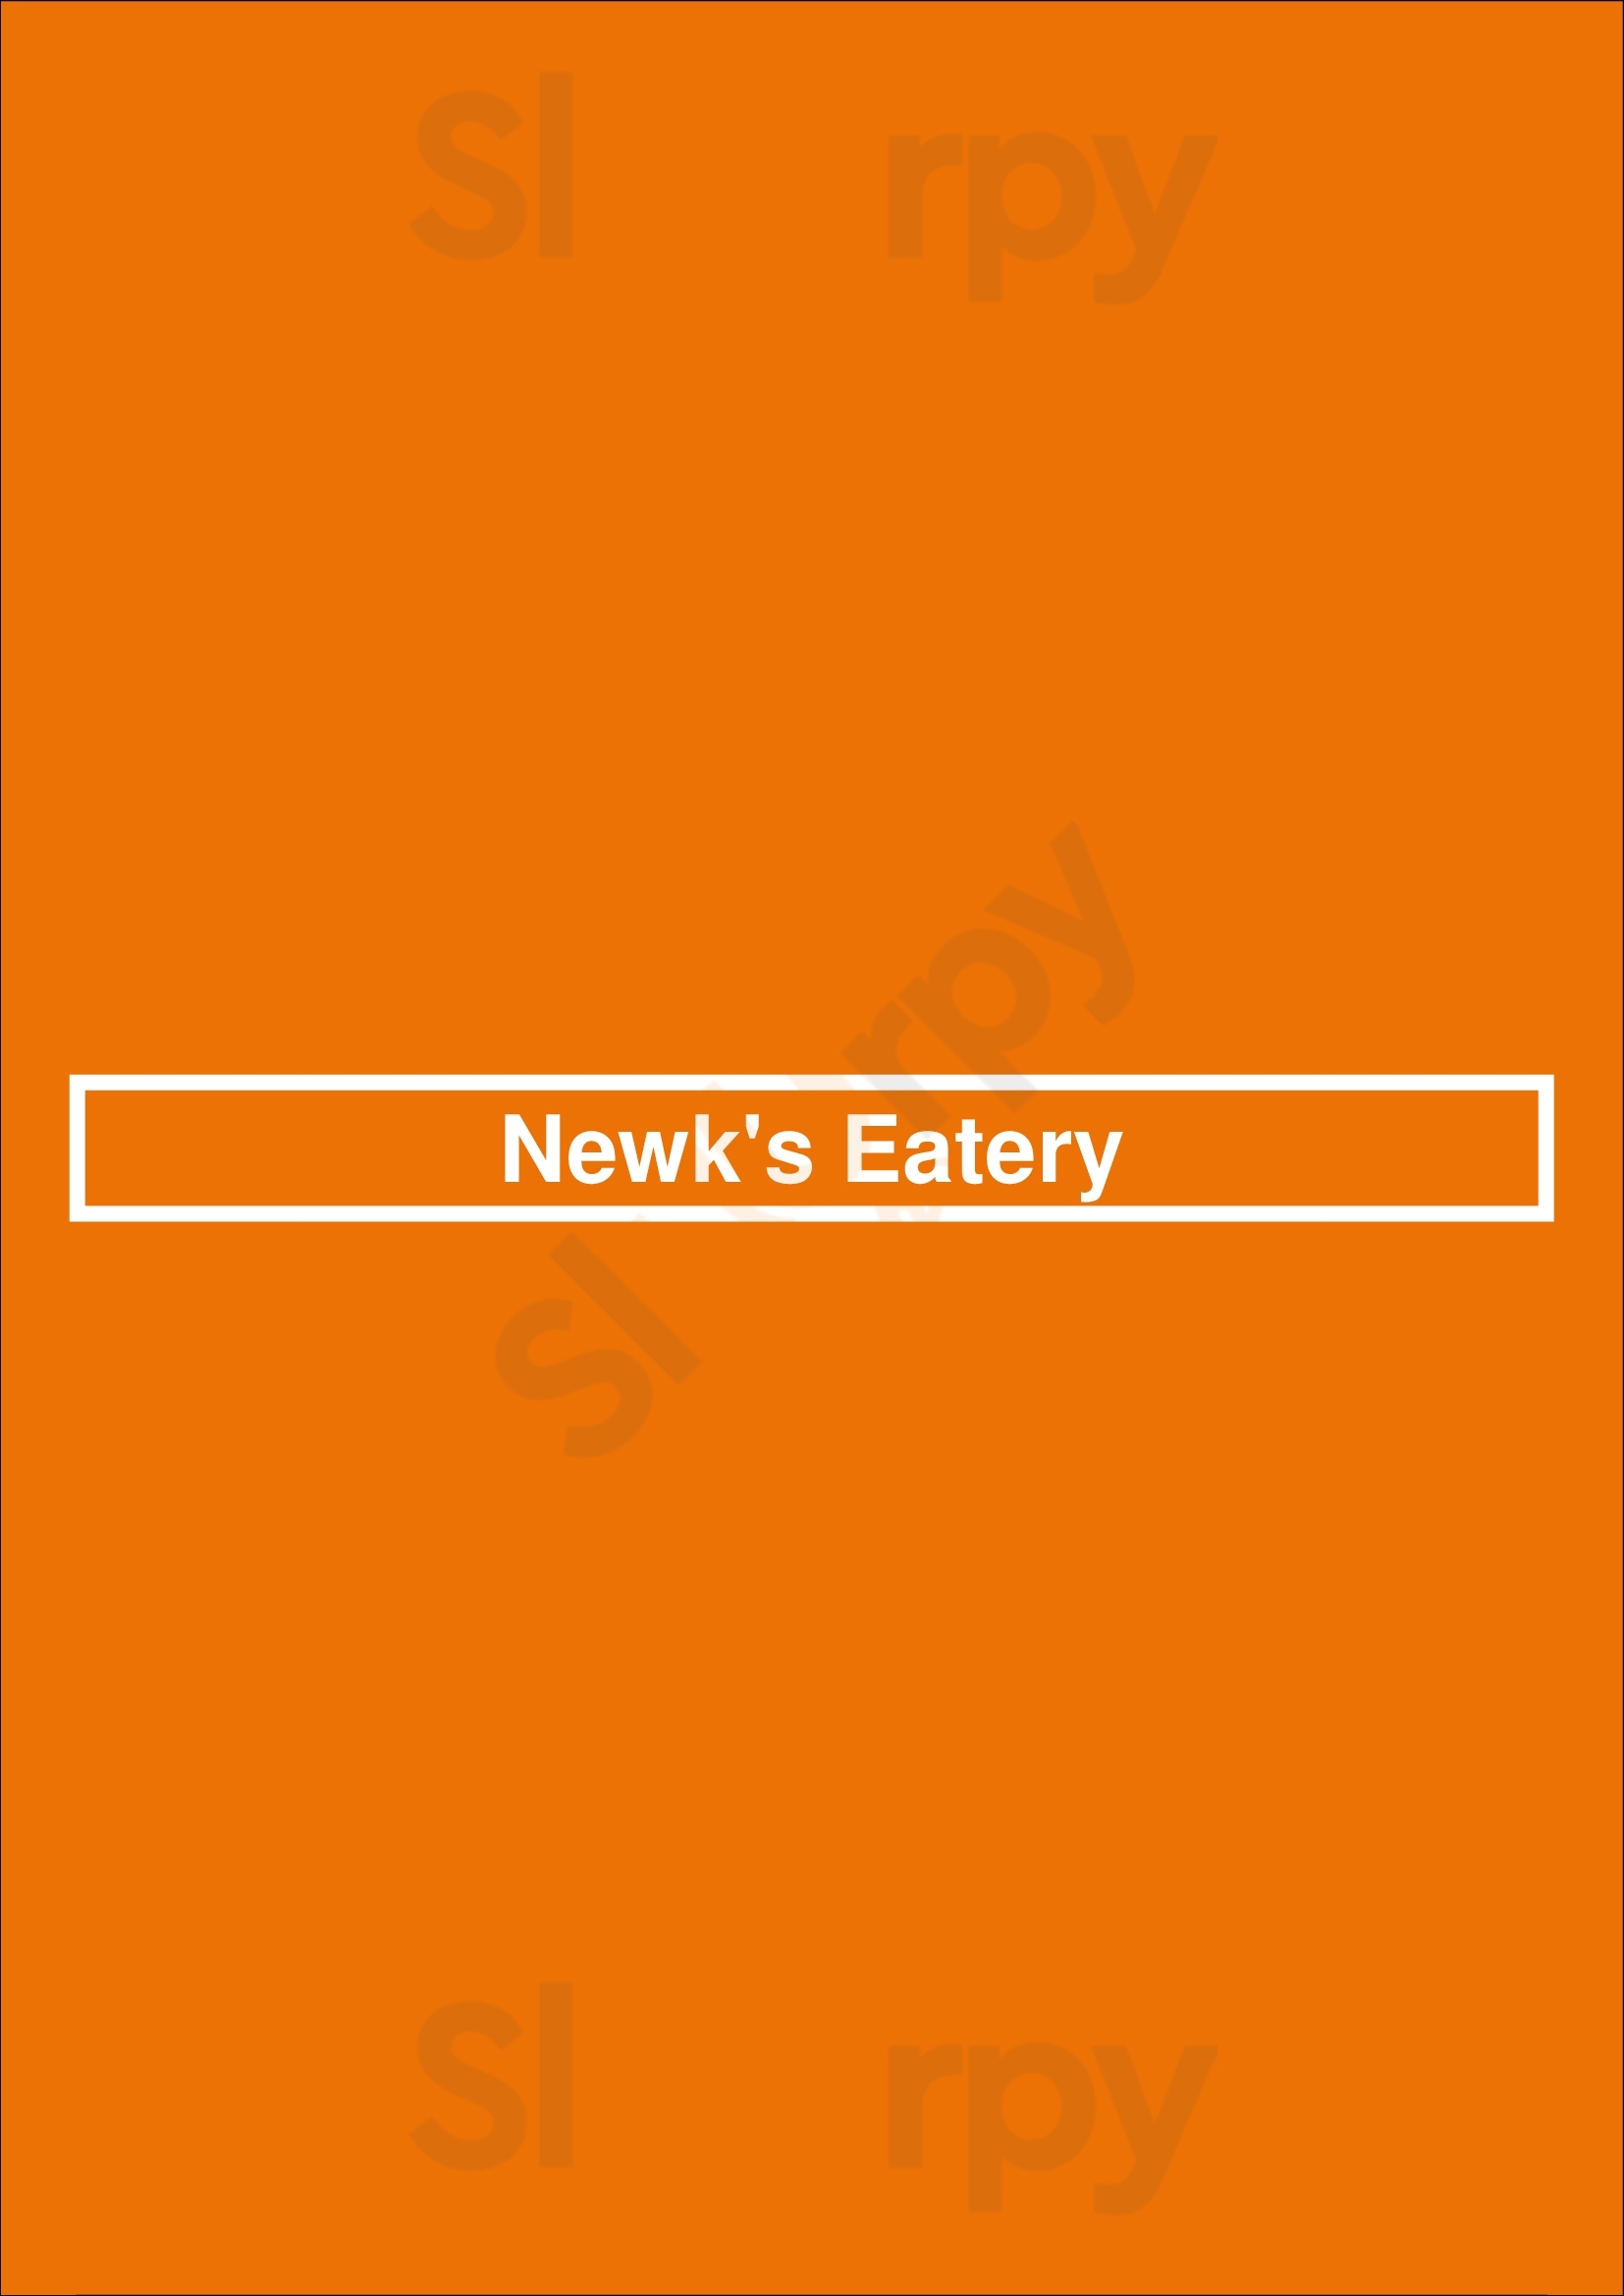 Newk's Eatery Fort Worth Menu - 1